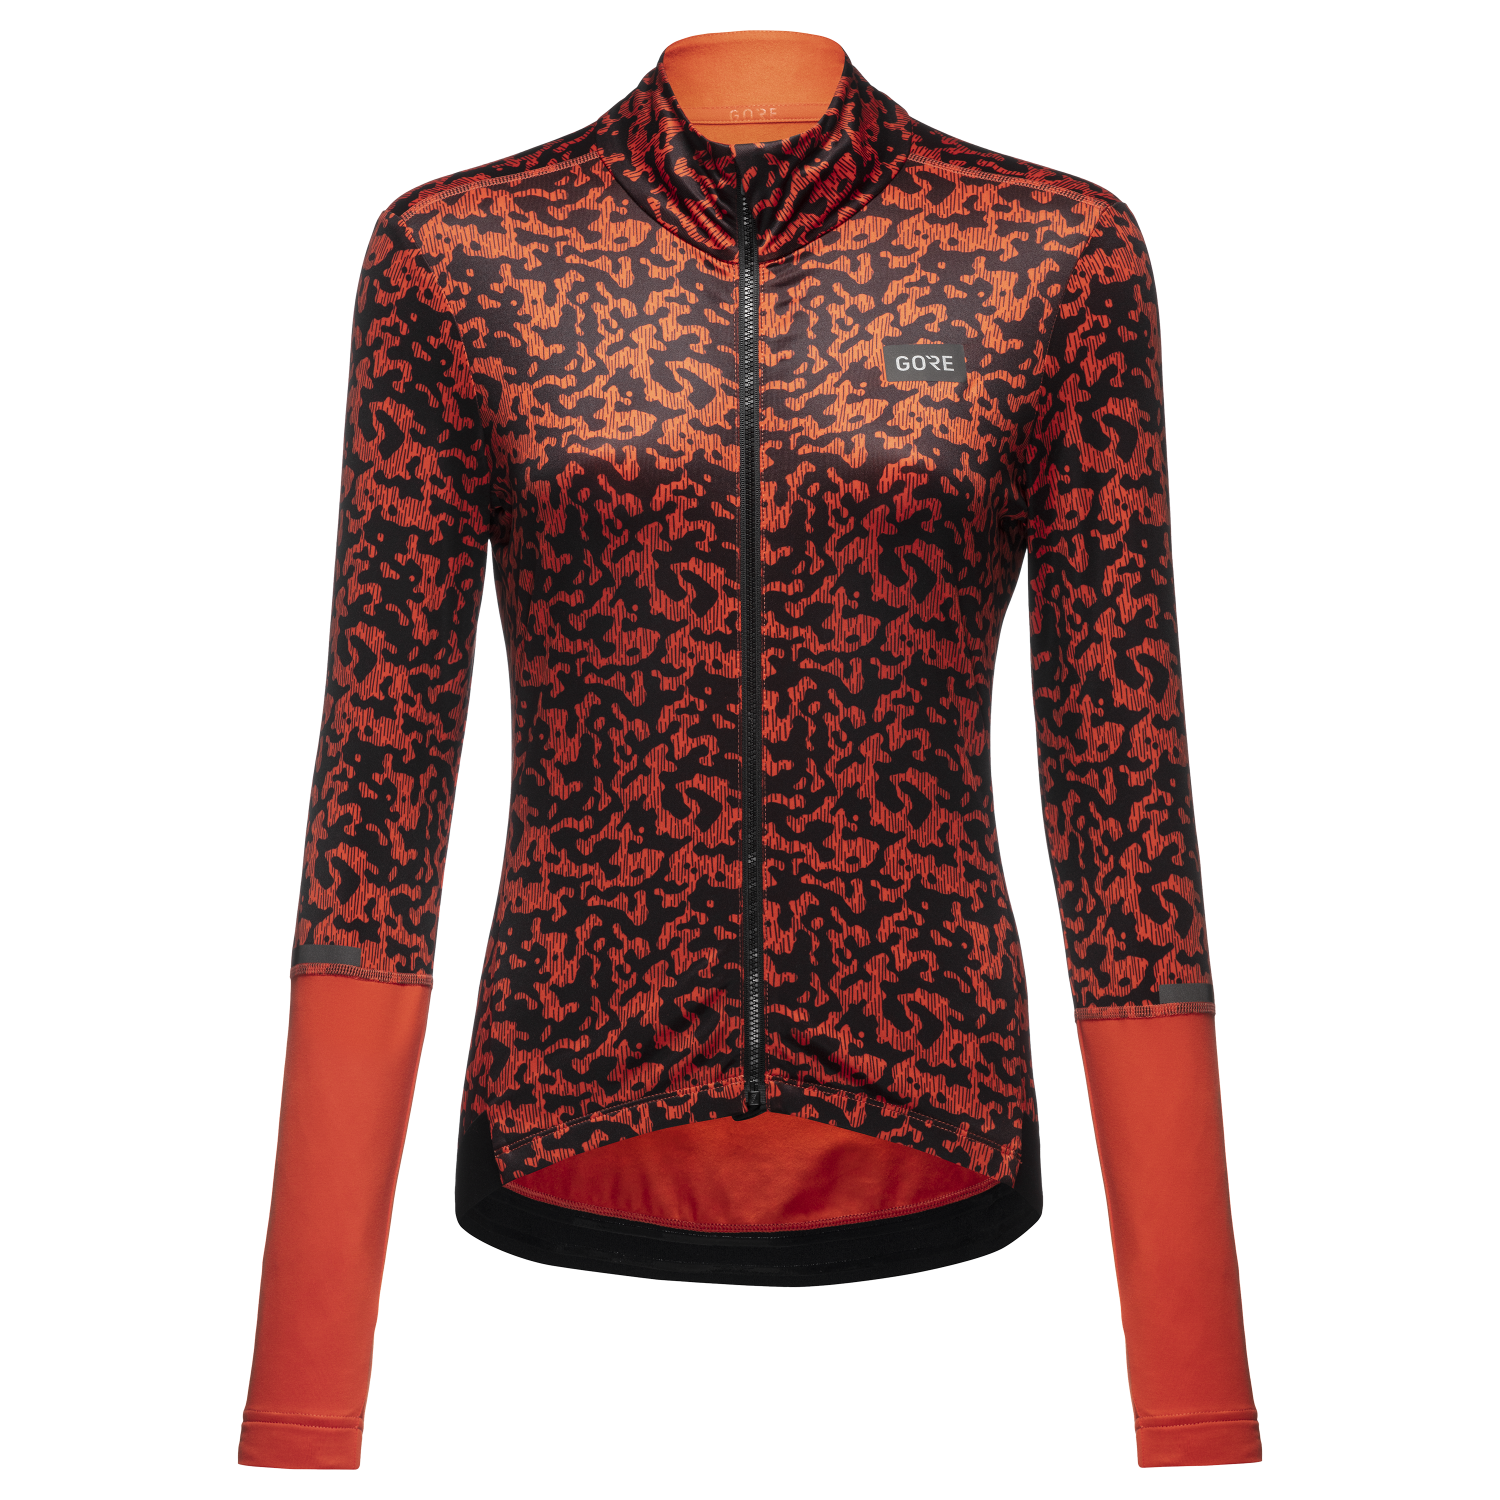 GOREWEAR Progress Thermo Rain Camo Cycling Jersey Women's in Fireball/Black | XS (0-2) | Form fit